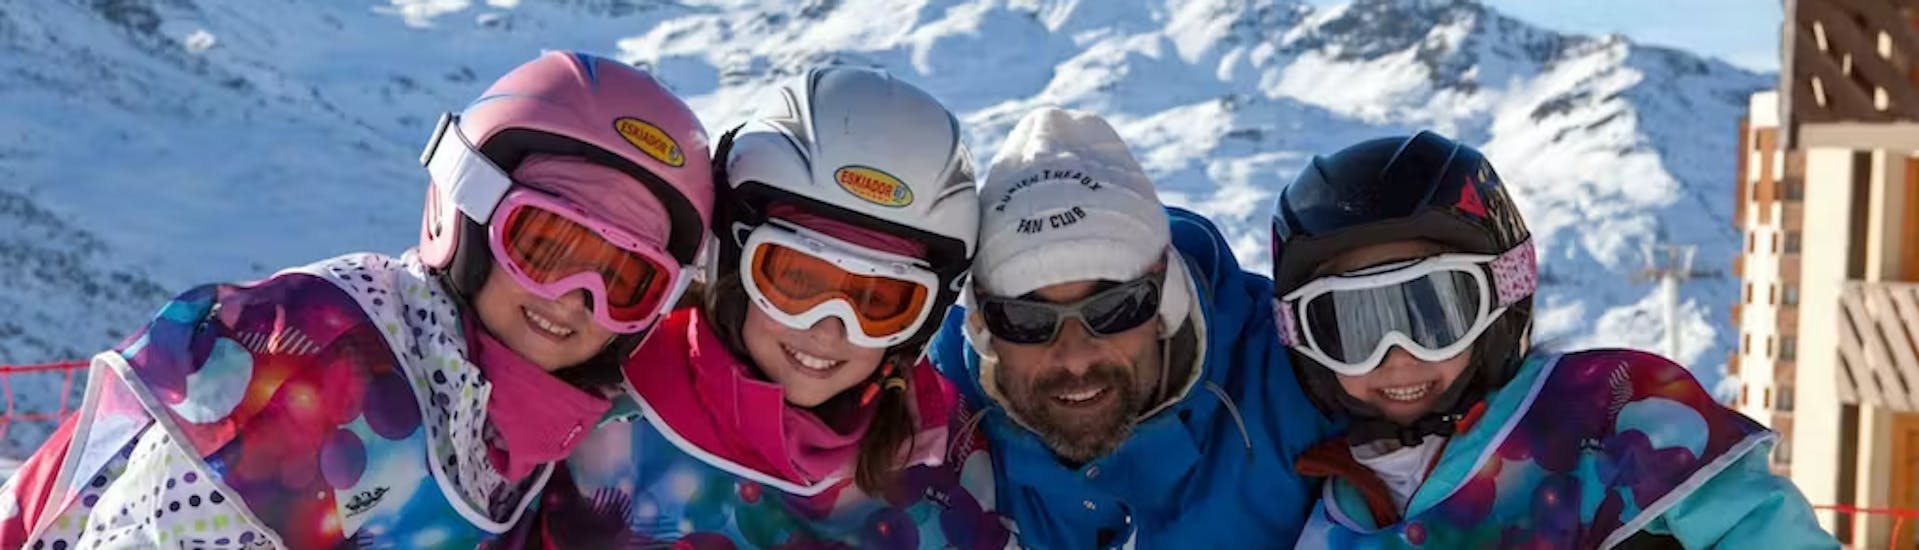 Clases de esquí para niños principiantes (5-13 años) - Máximo 4 por grupo.